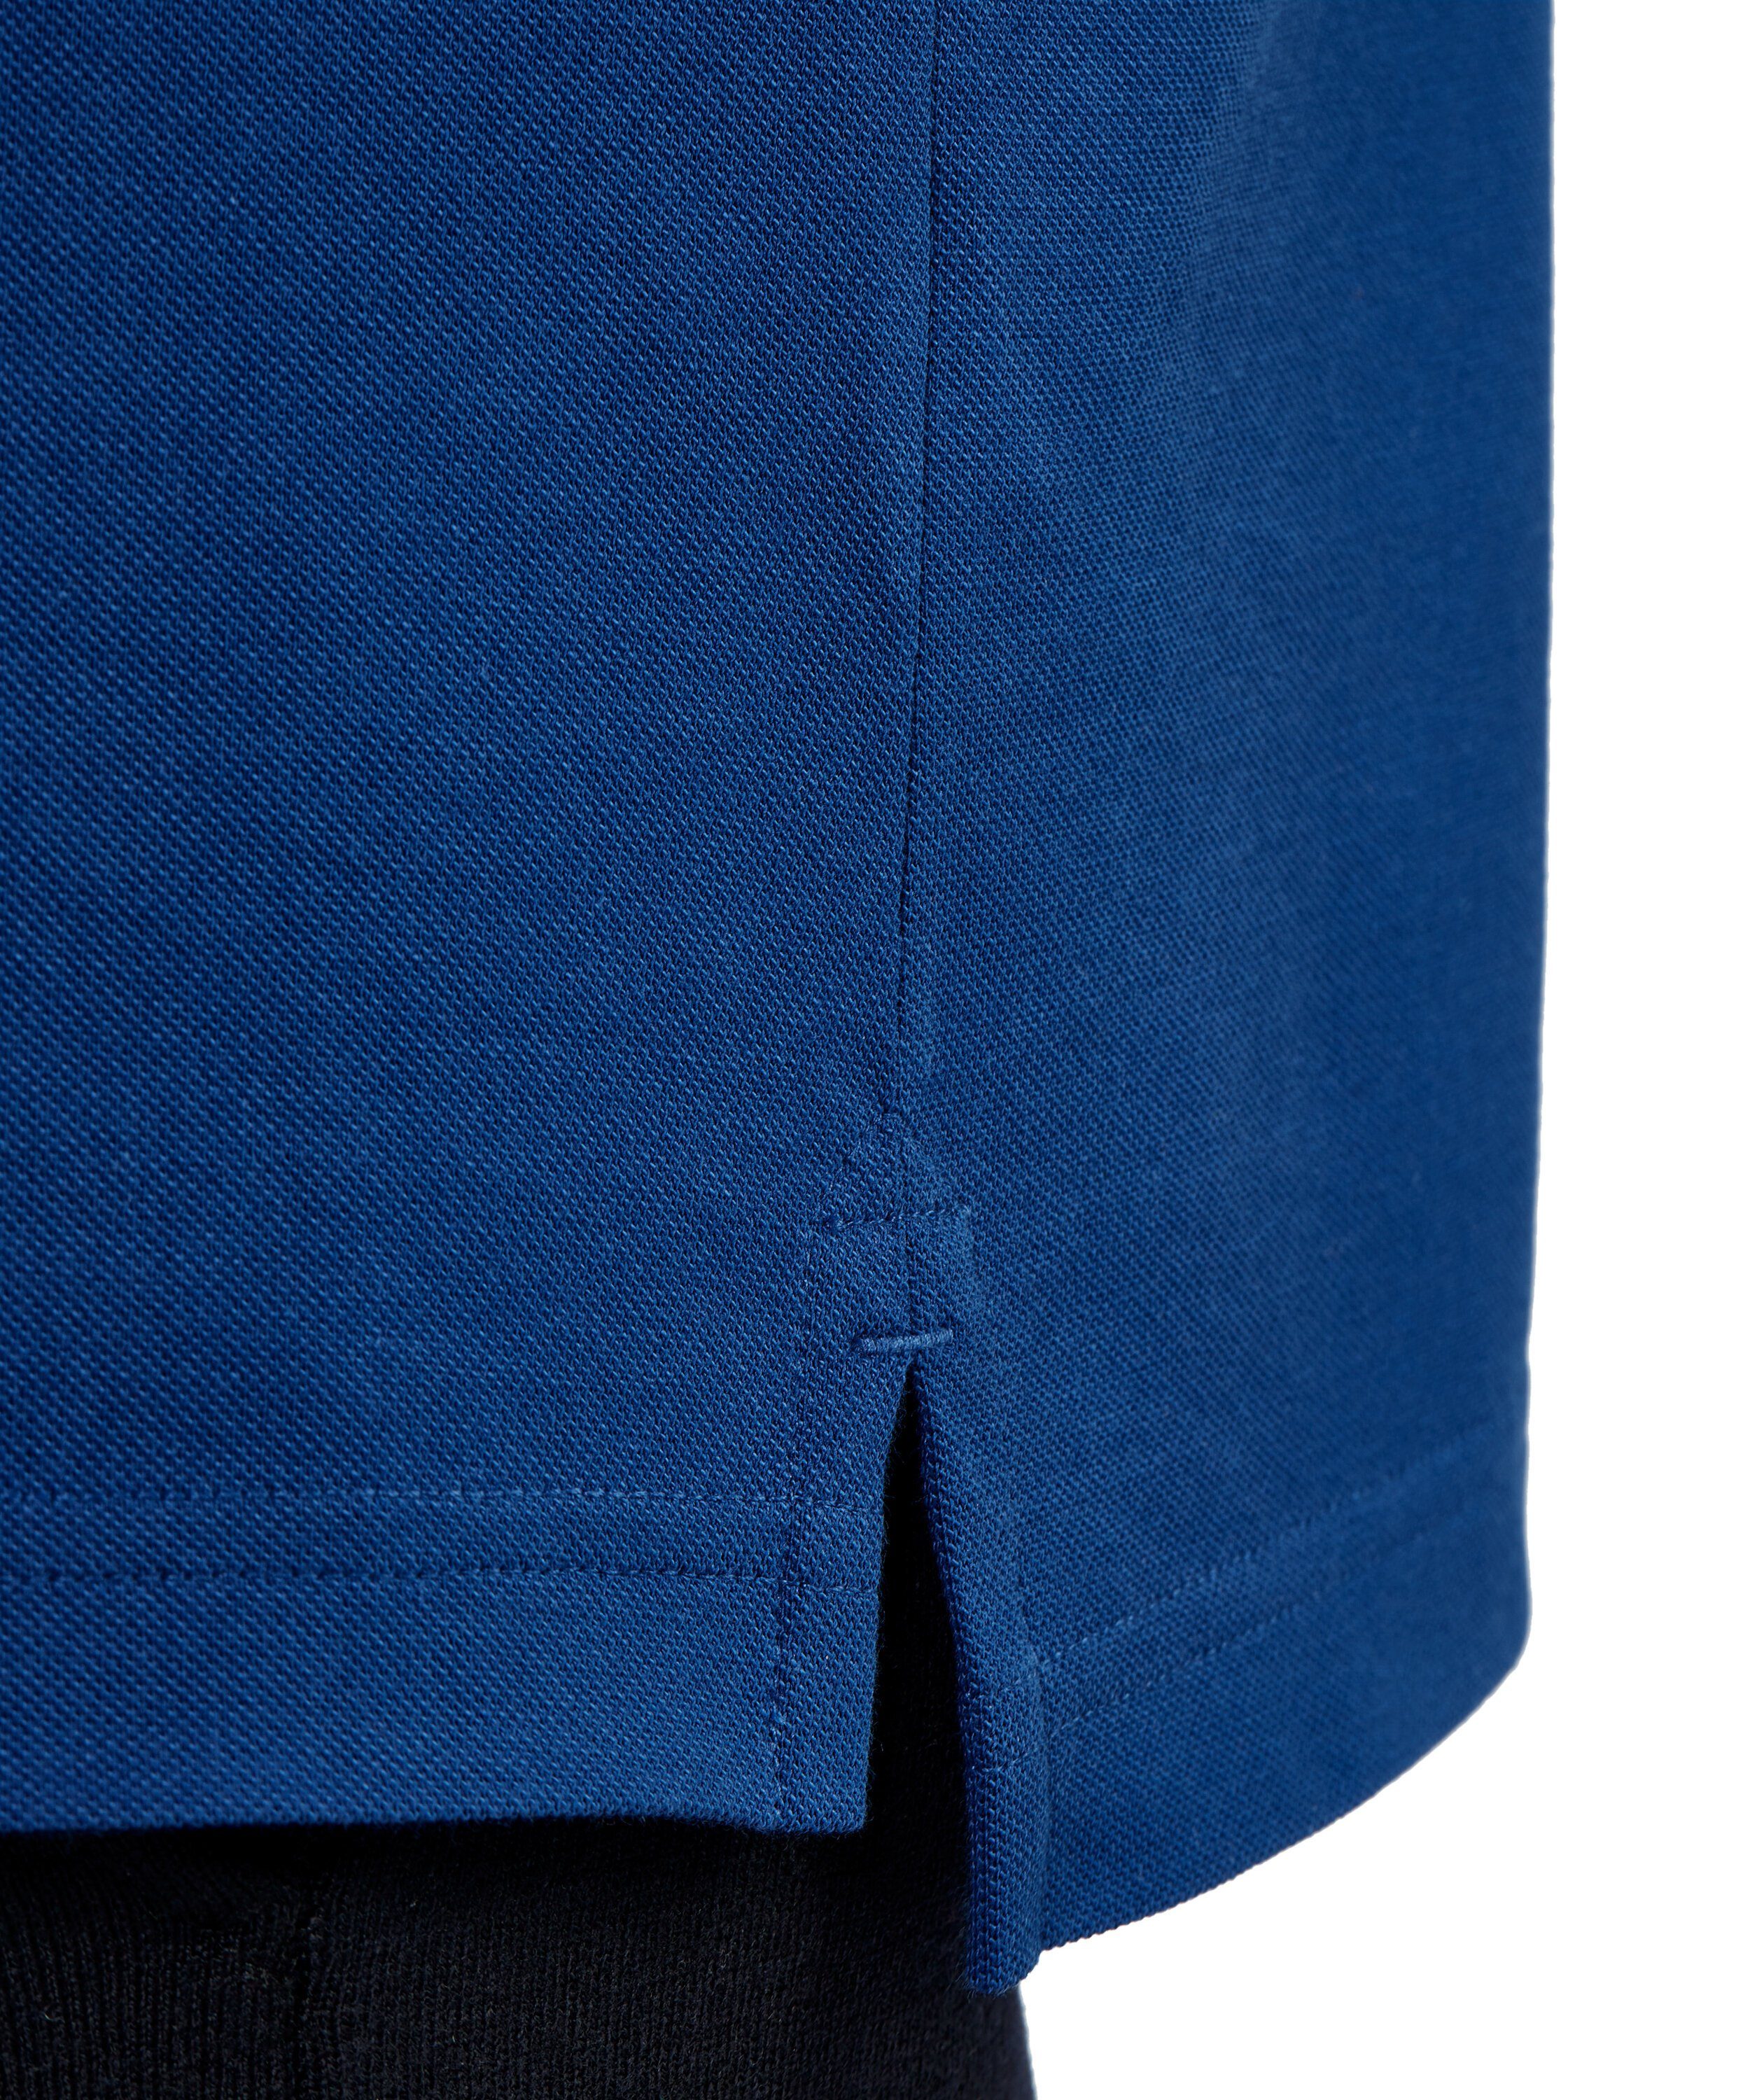 FALKE hochwertiger aus Poloshirt (6493) Pima-Baumwolle blue petrol